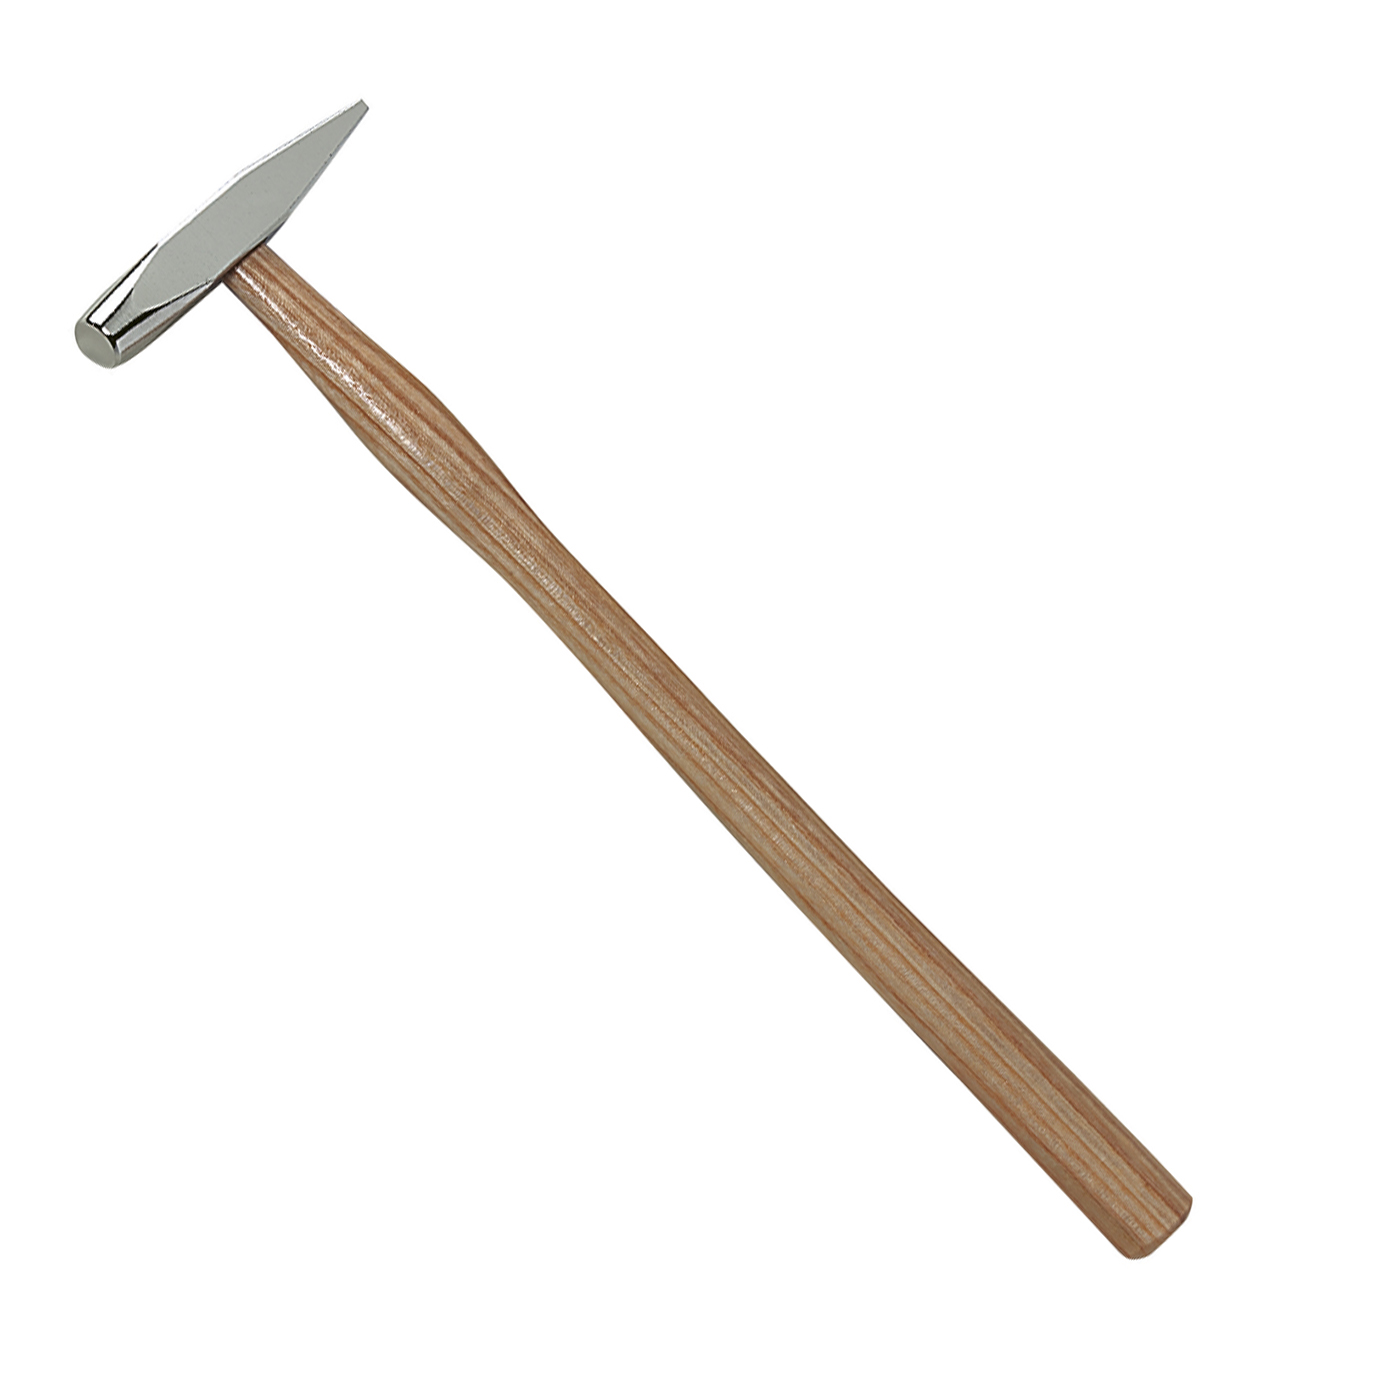 Niethammer, Kopflänge 75 mm - 1 Stück